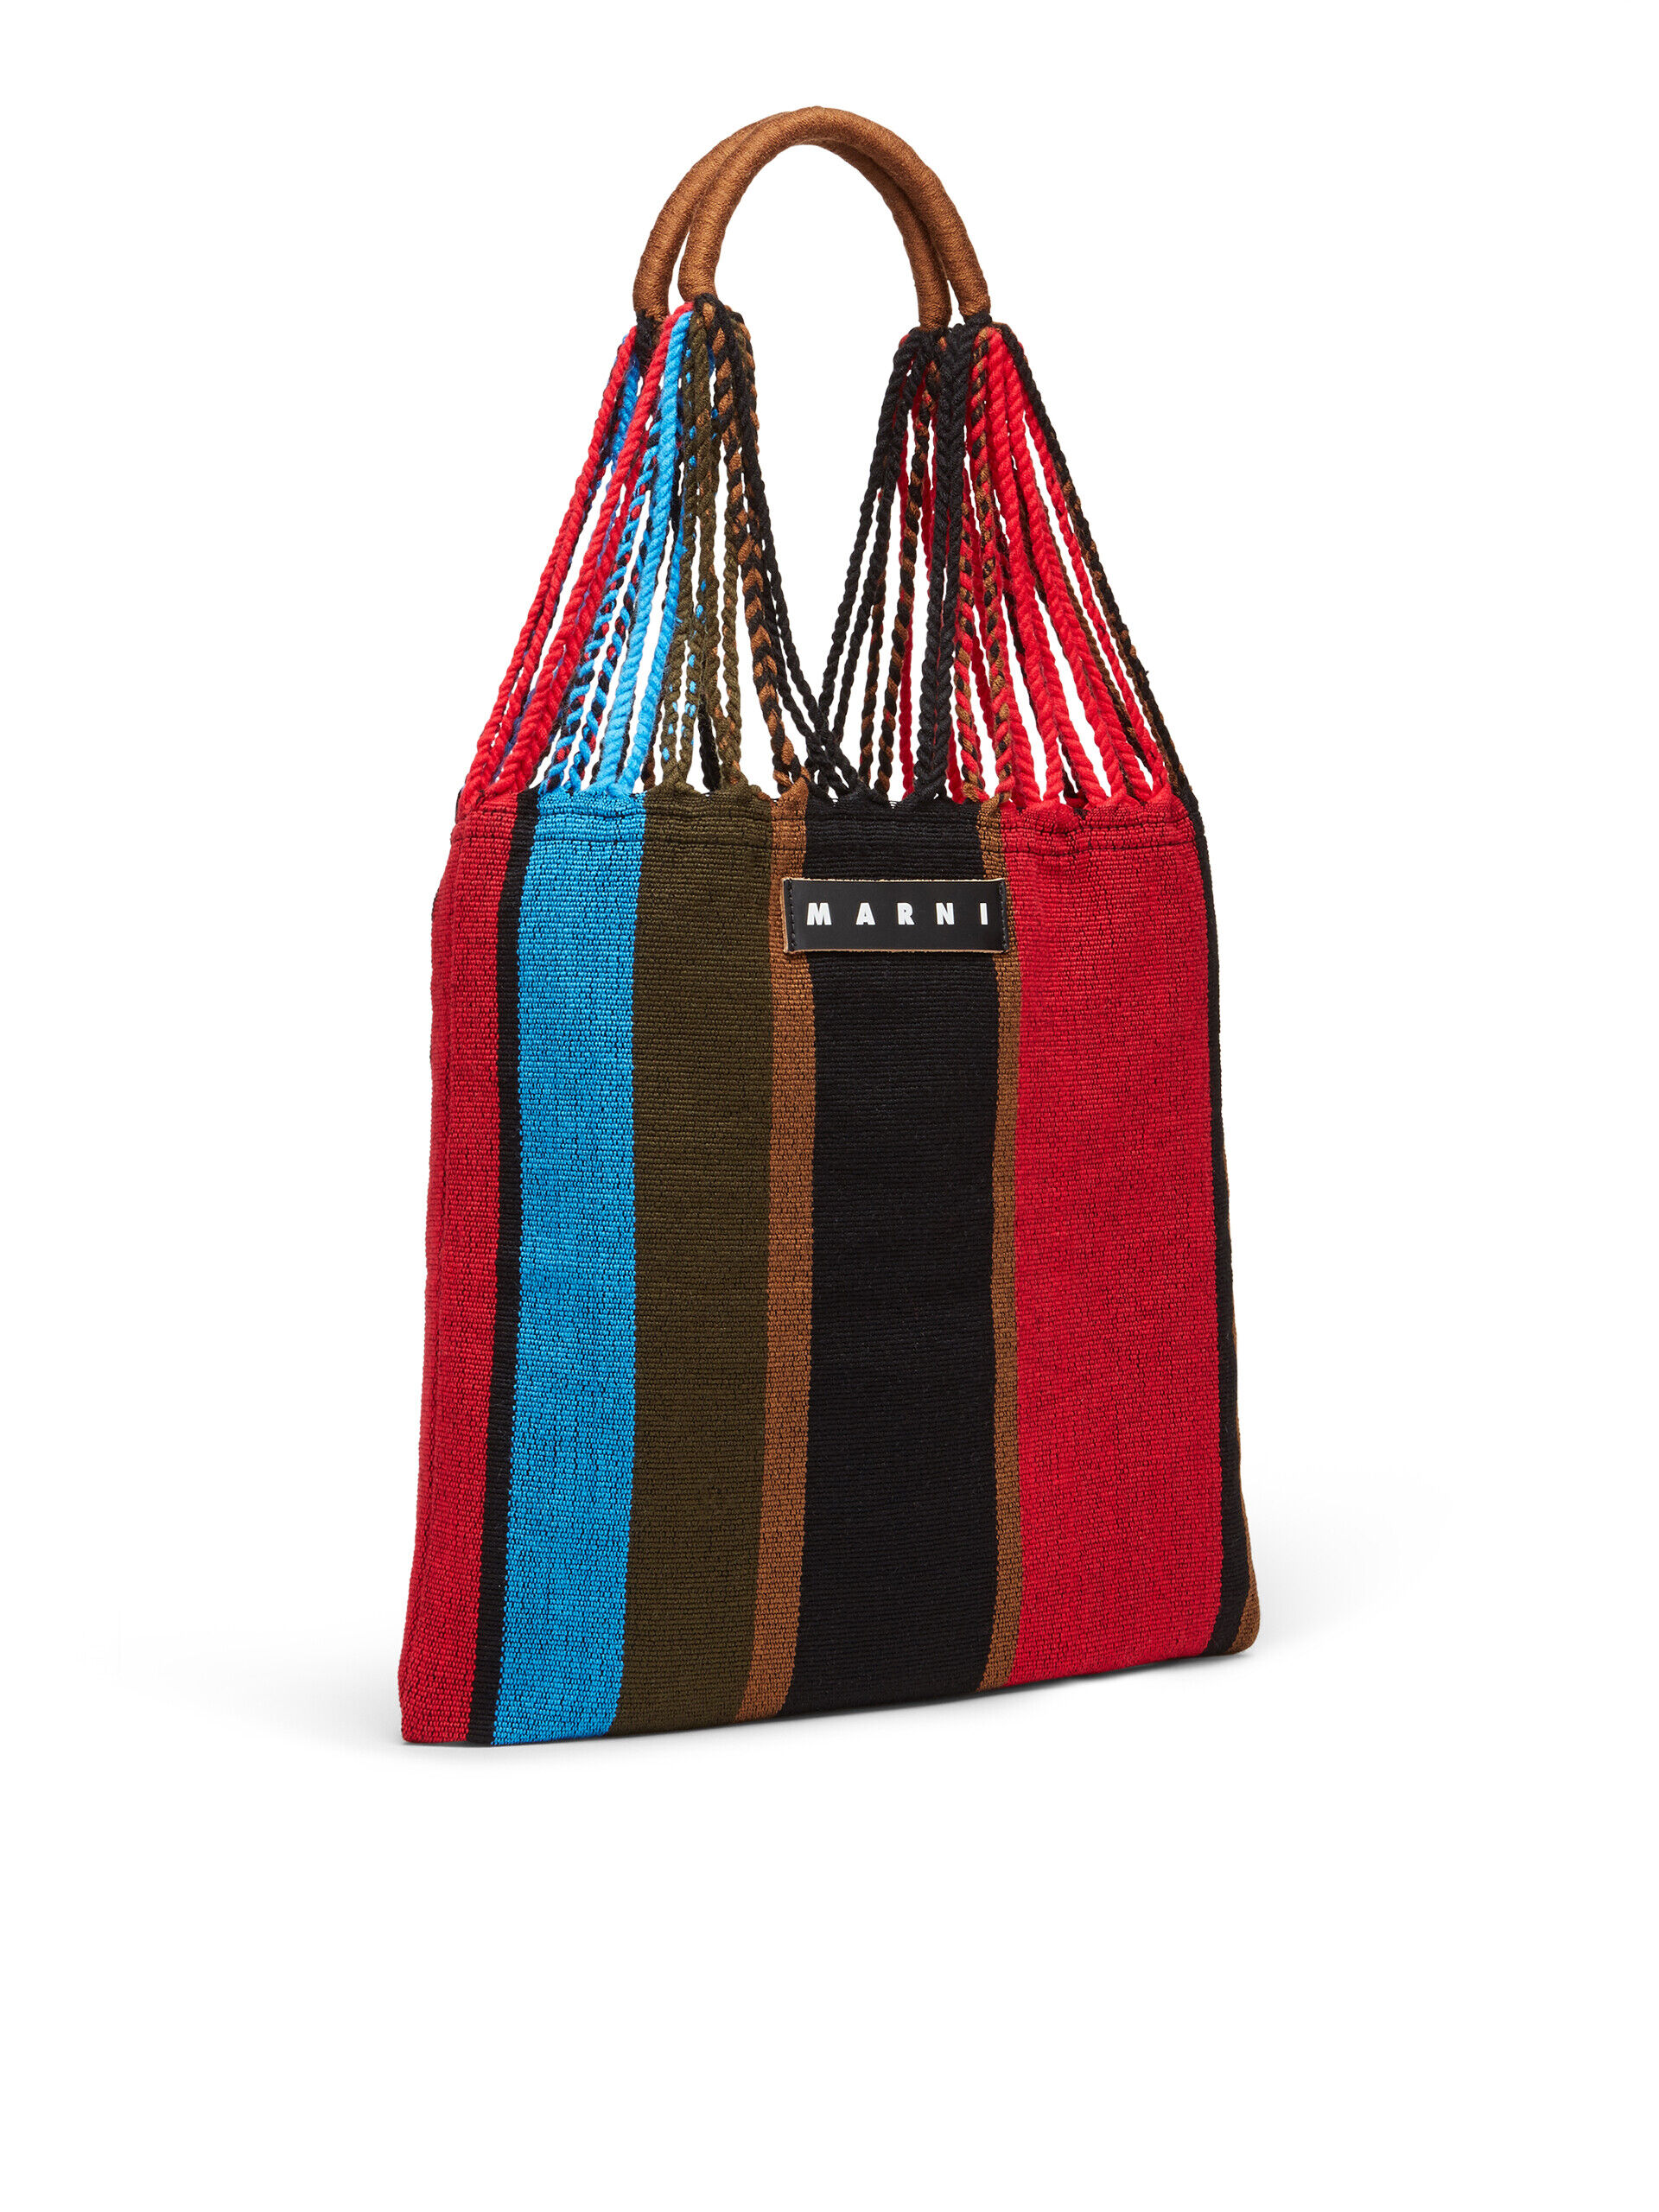 MARNI MARKET HAMMOCK bag in multicolor crochet | Marni